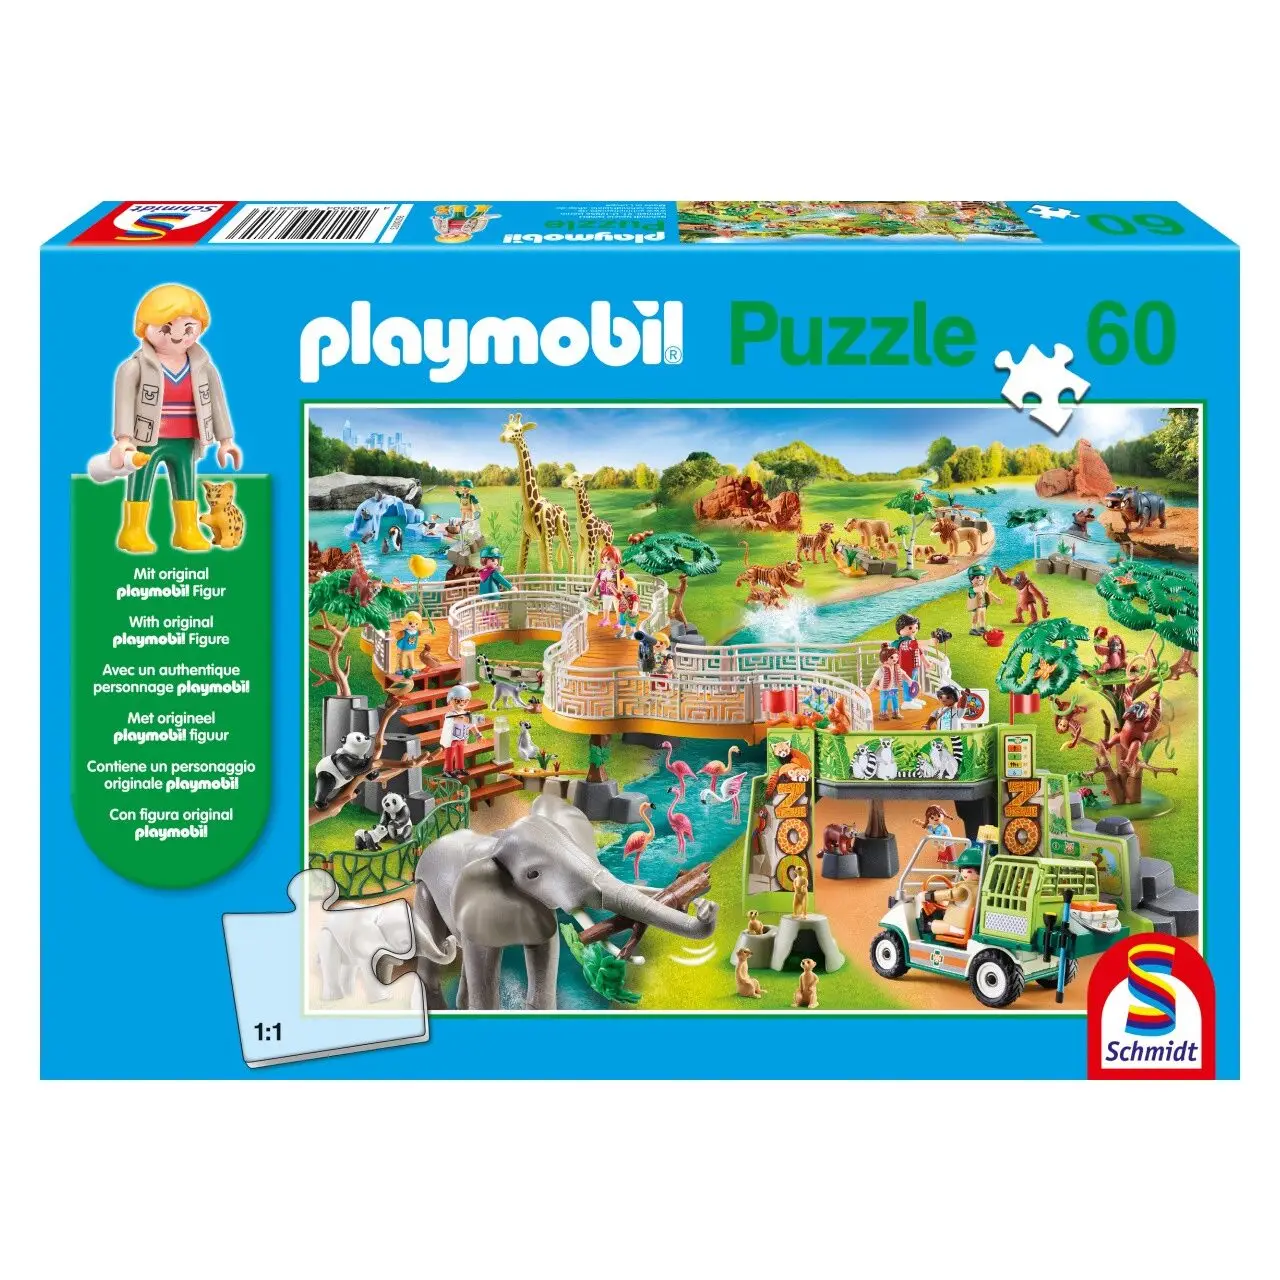 Playmobil inklusive Zoo Figur Puzzle